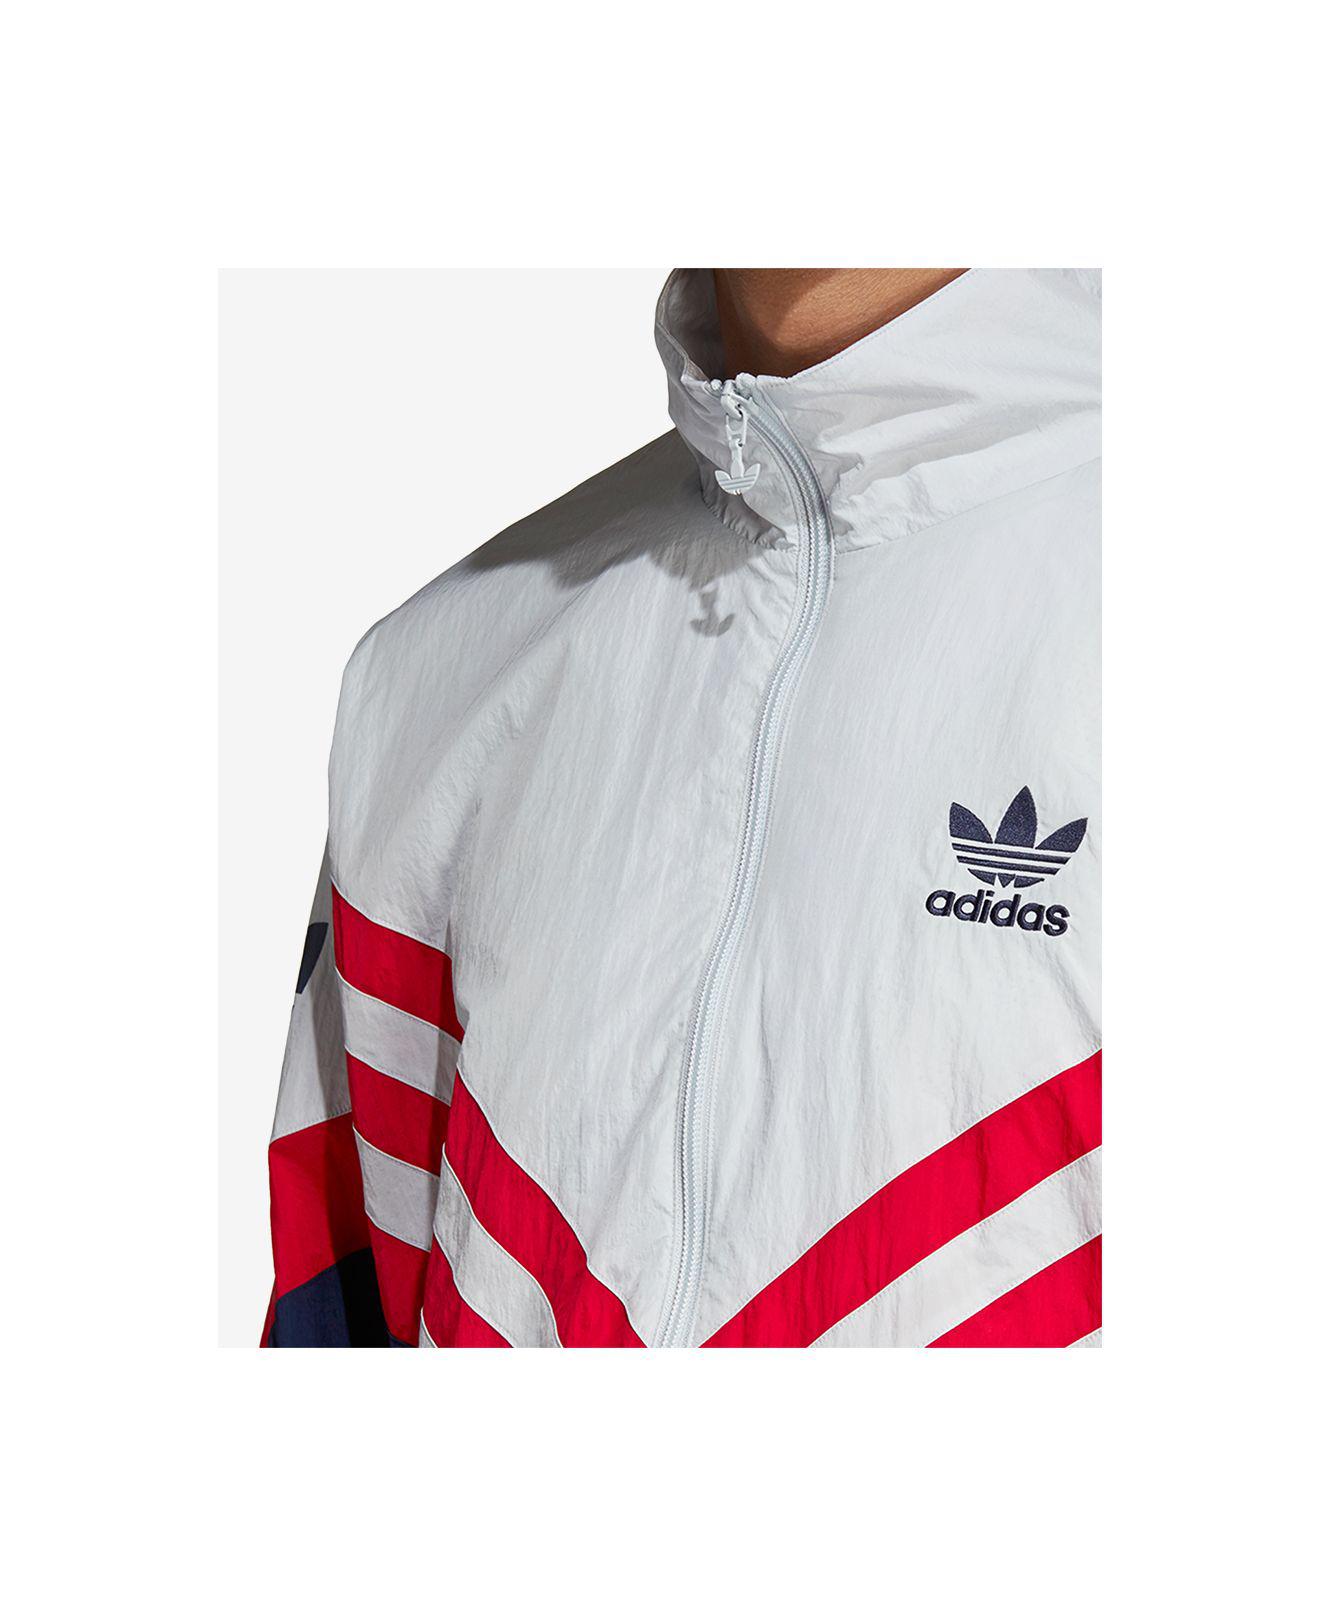 adidas men's originals sportive colorblocked track jacket